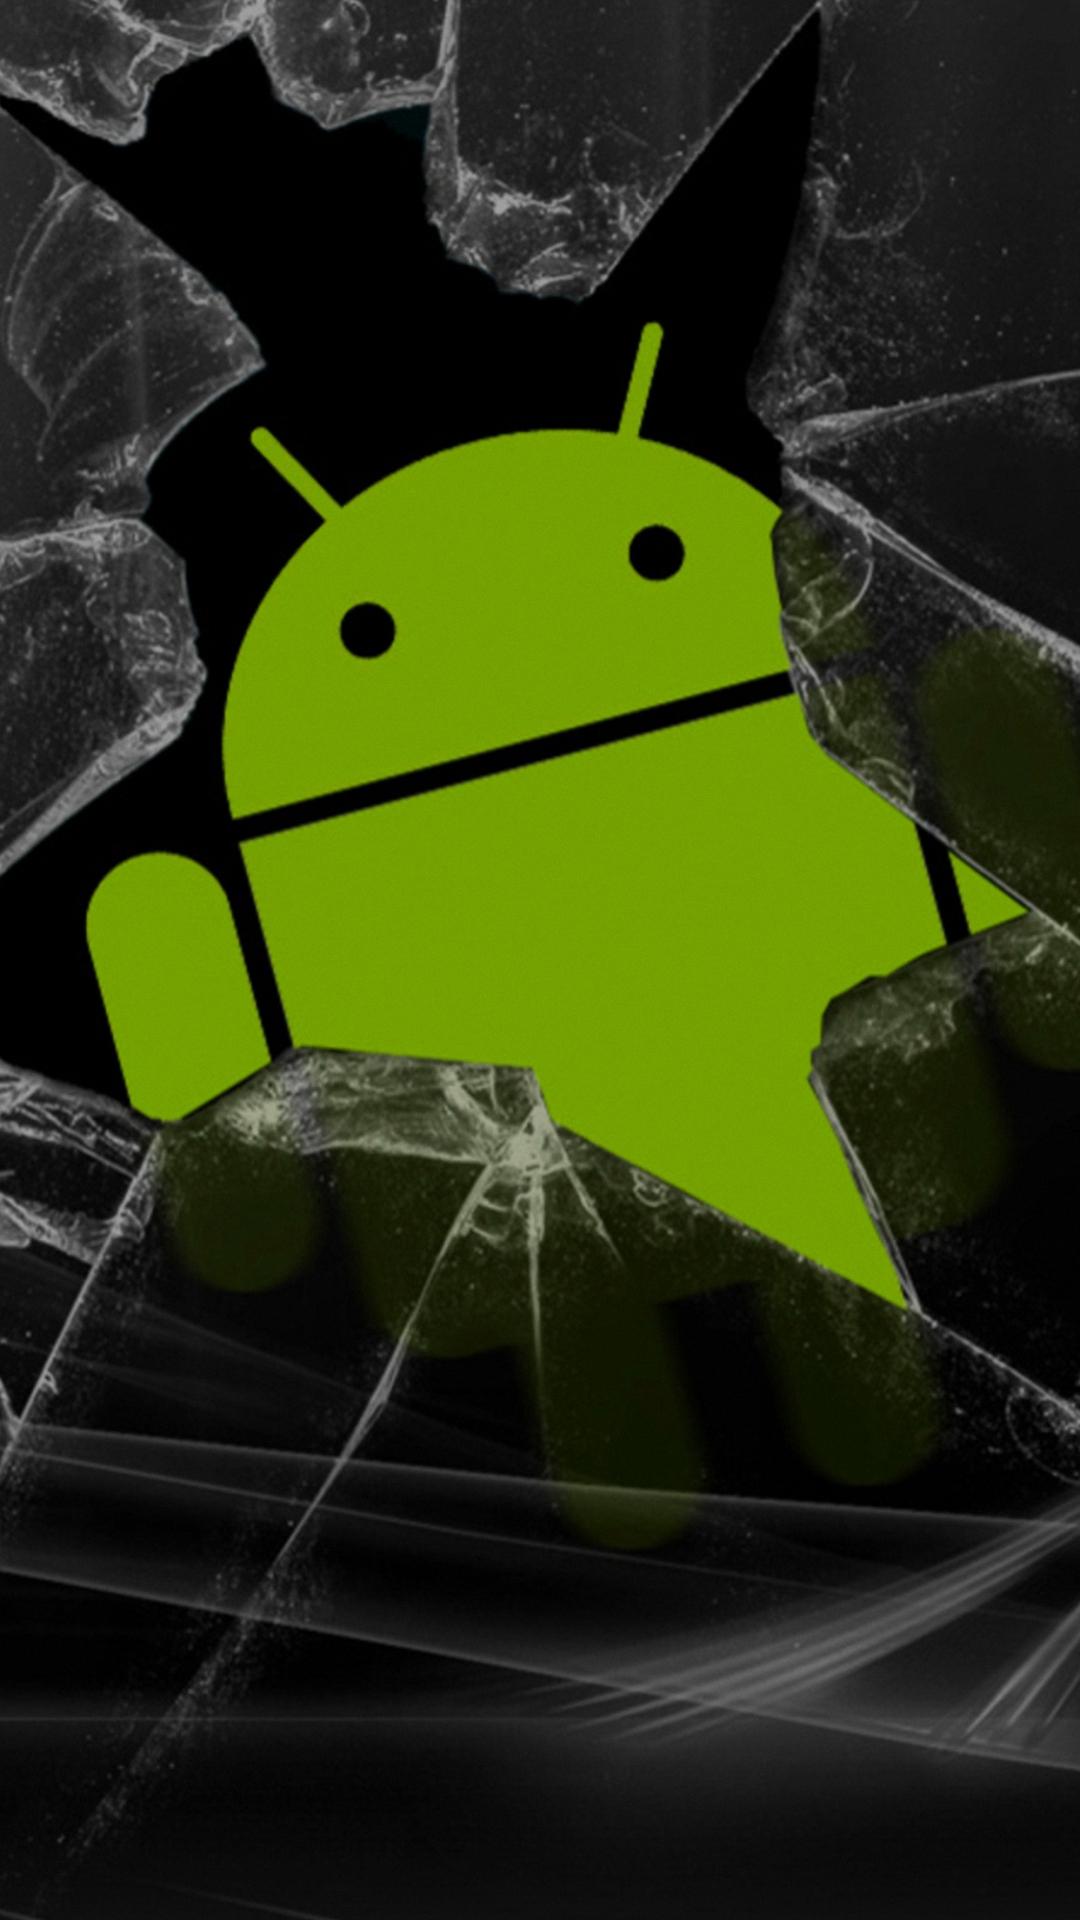 Android Broken Glass iPhone 6s Wallpaper HD